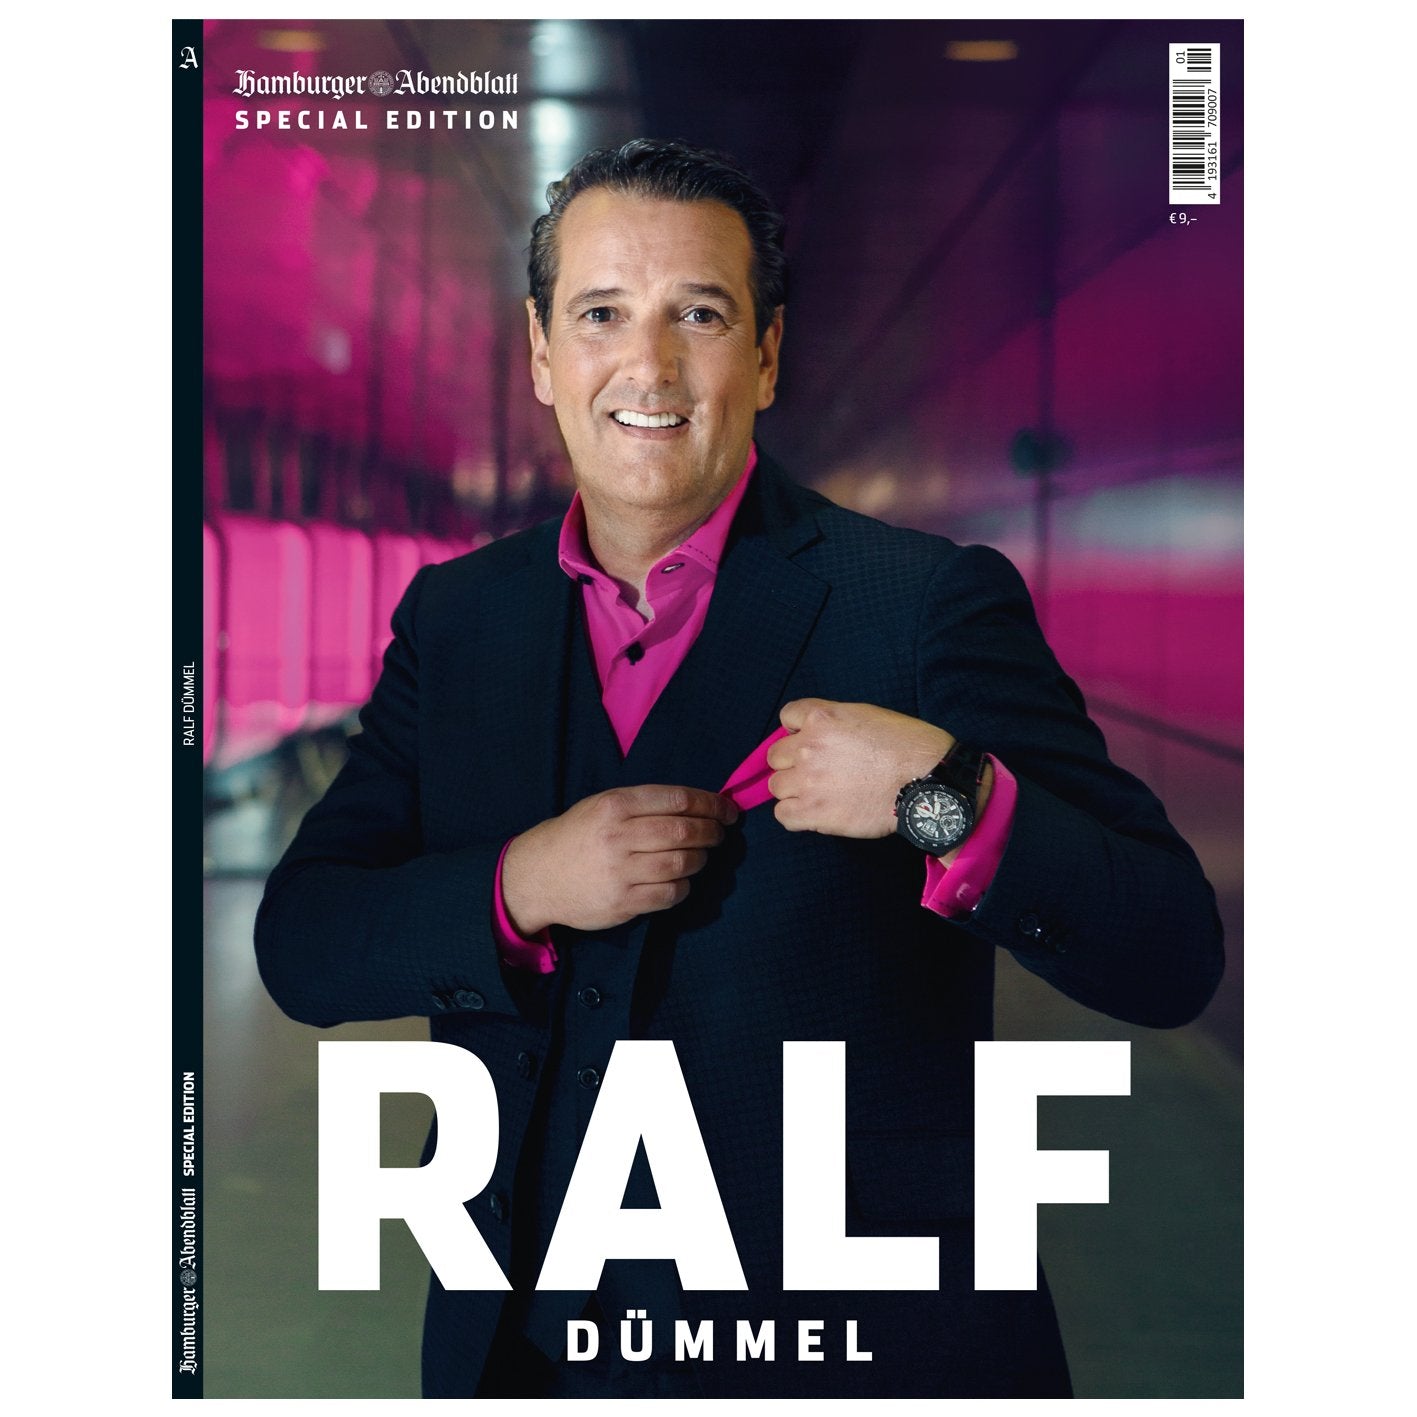 Nach DHDL-Deal mit Ralf Dümmel: Gomago feiert große Erfolge